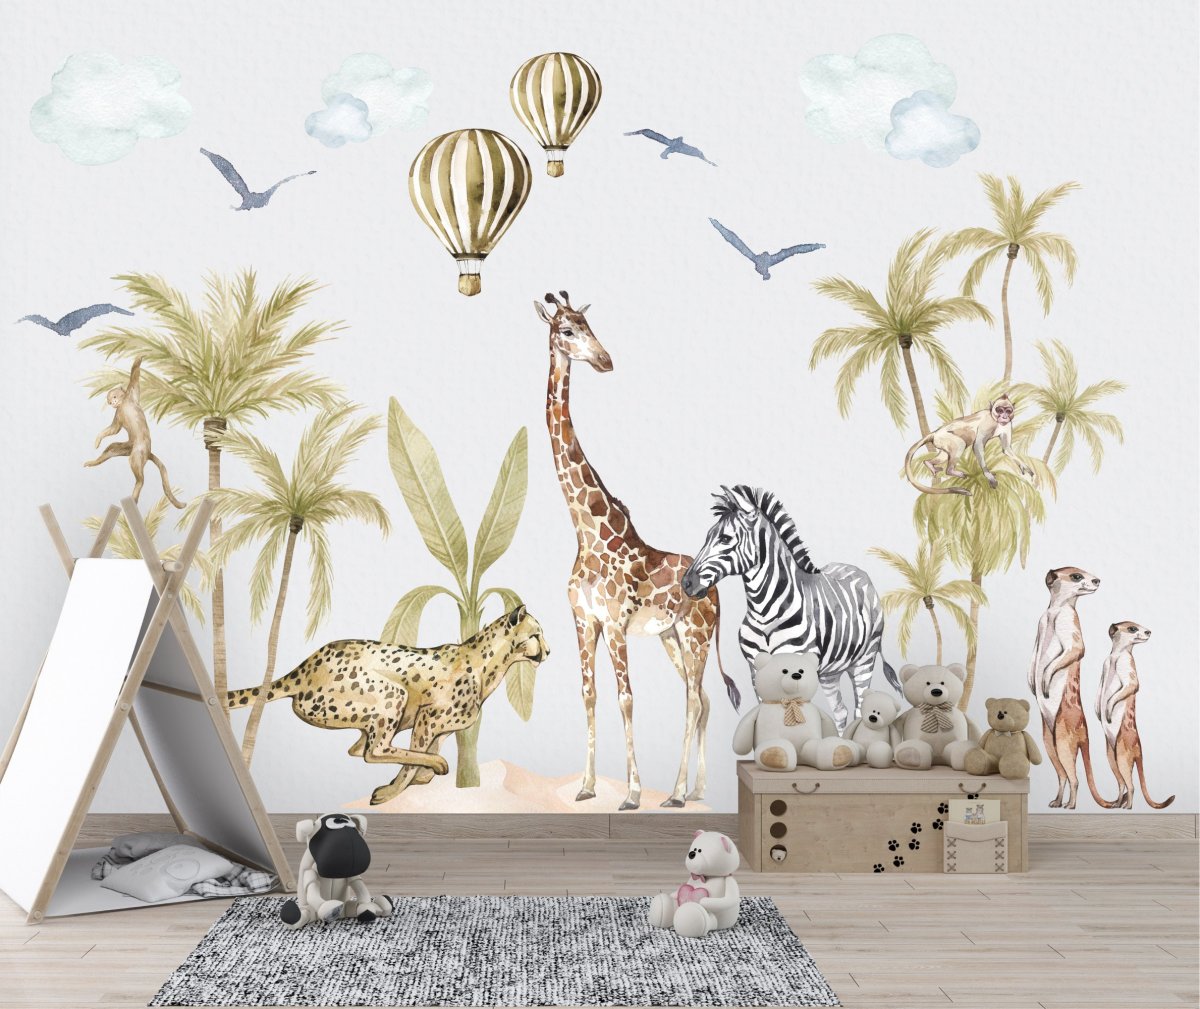 African Safari Nursery Wall Decal with African Safari Animals- Giraffe, Monkey, Zebra